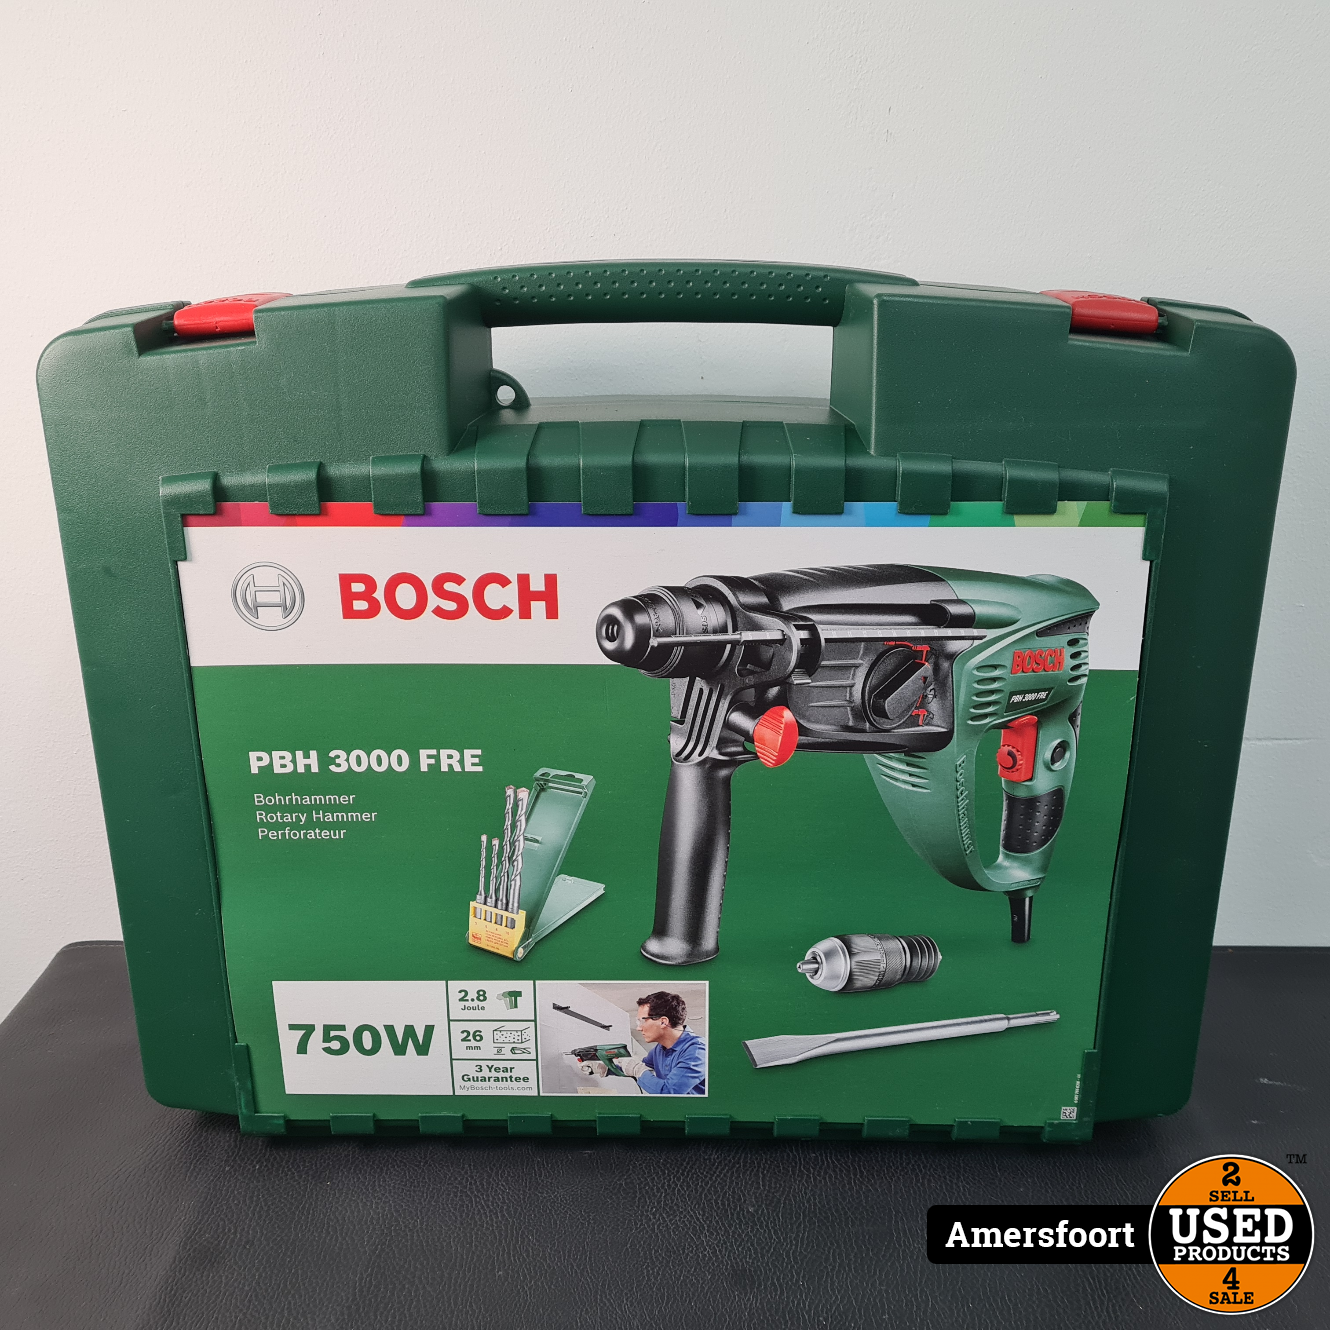 Bloemlezing het internet Encommium Bosch PBH 3000 FRE SDS-Plus Boorhamer | Nieuw - Used Products Amersfoort